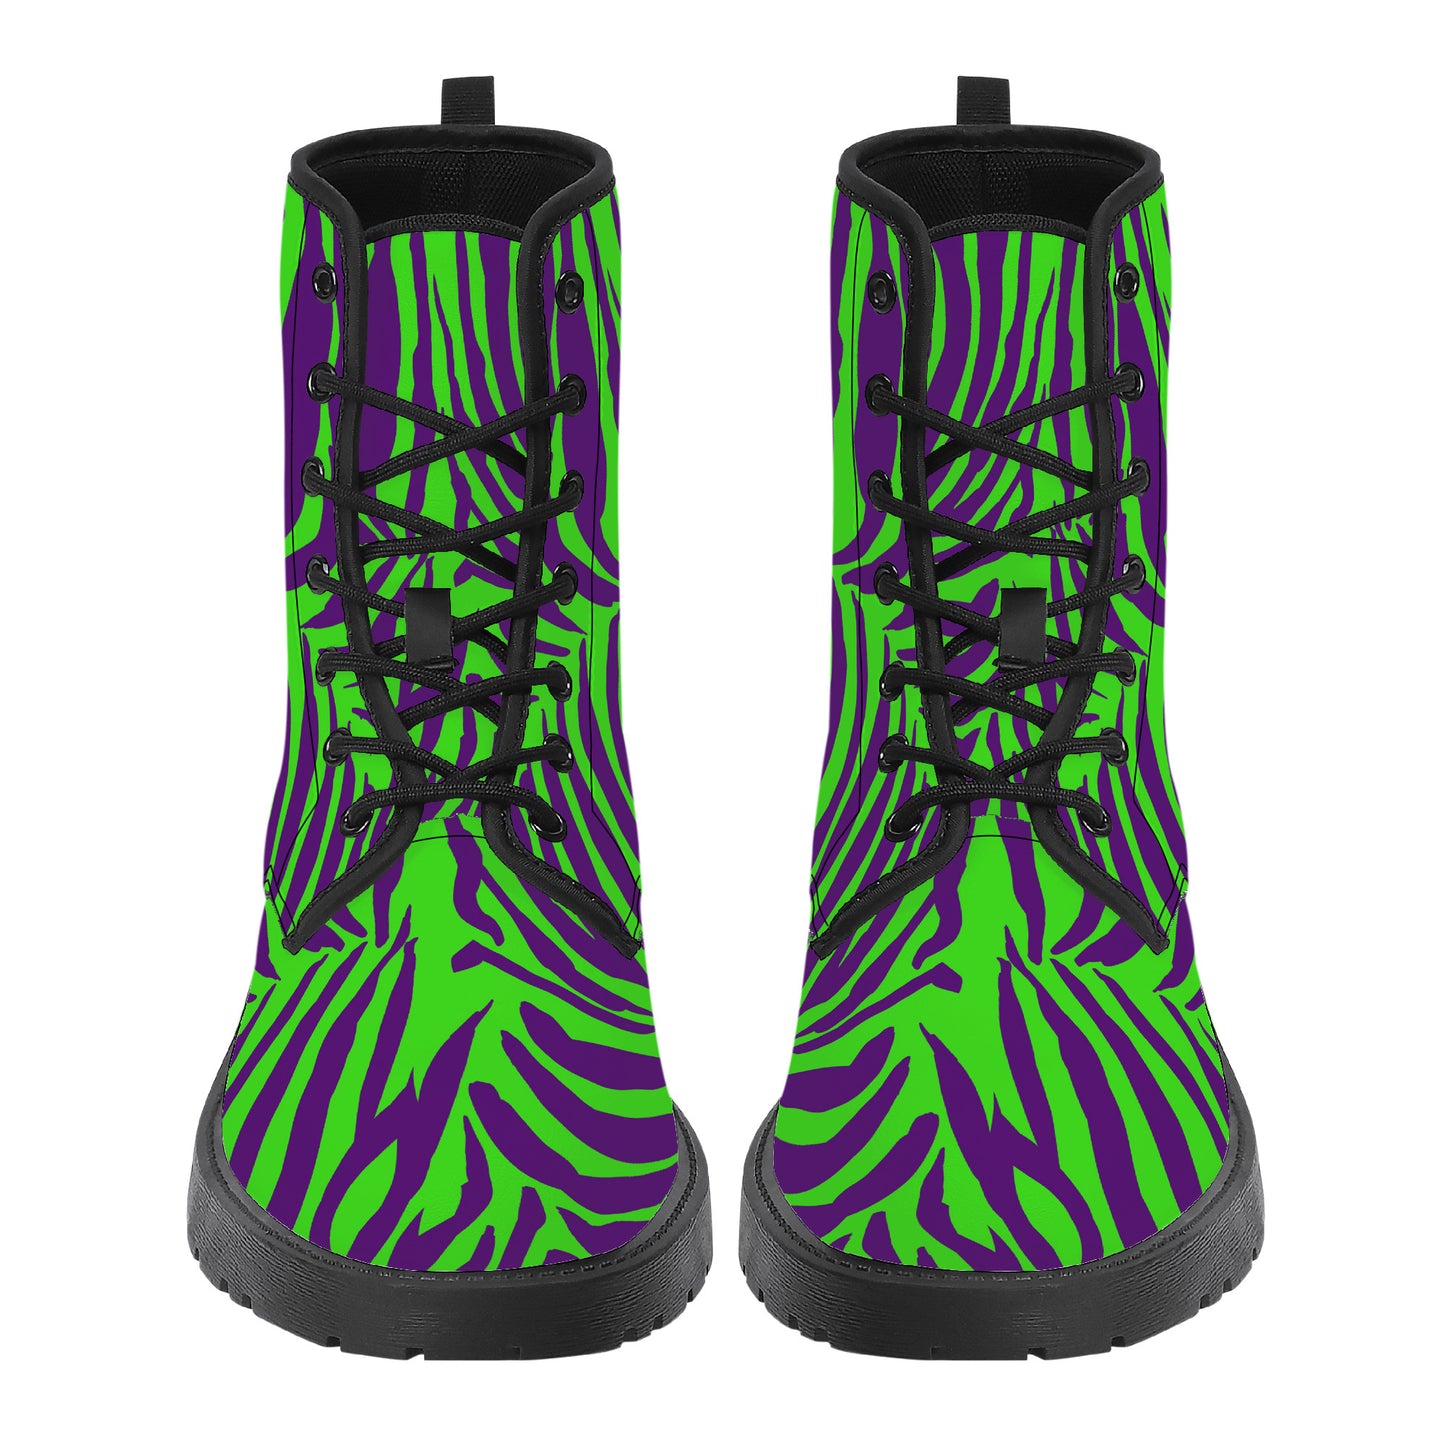 "Zebra" Eco-friendly Boots